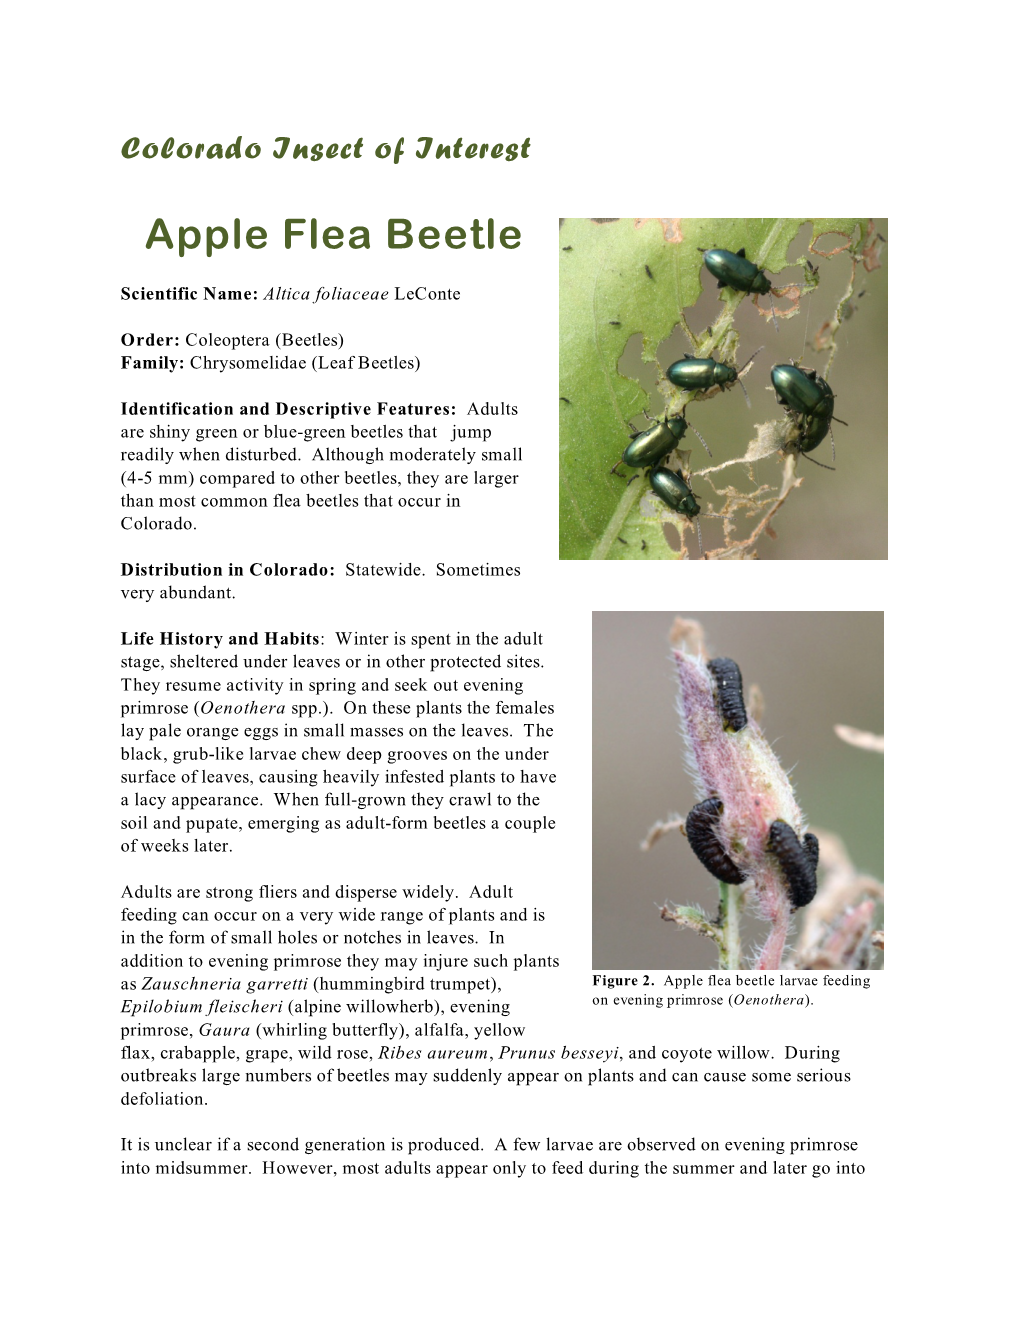 Apple Flea Beetle